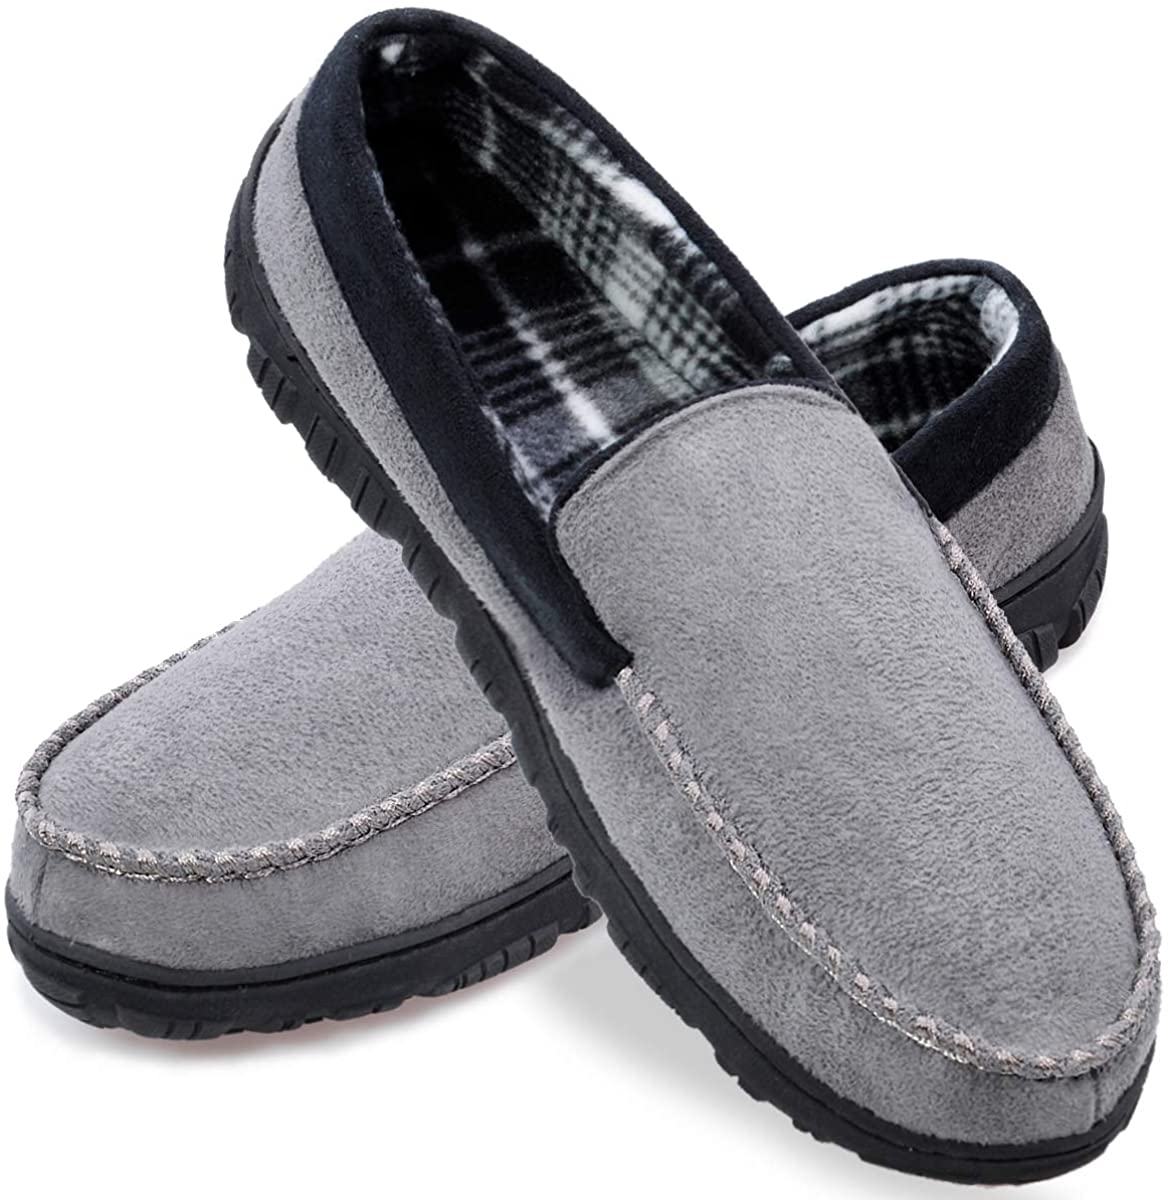 shoeslocker Slippers for Men Slippers Memory Foam Indoor Outdoor Mens Moccasin House Shoes Anti Slip Slippers 